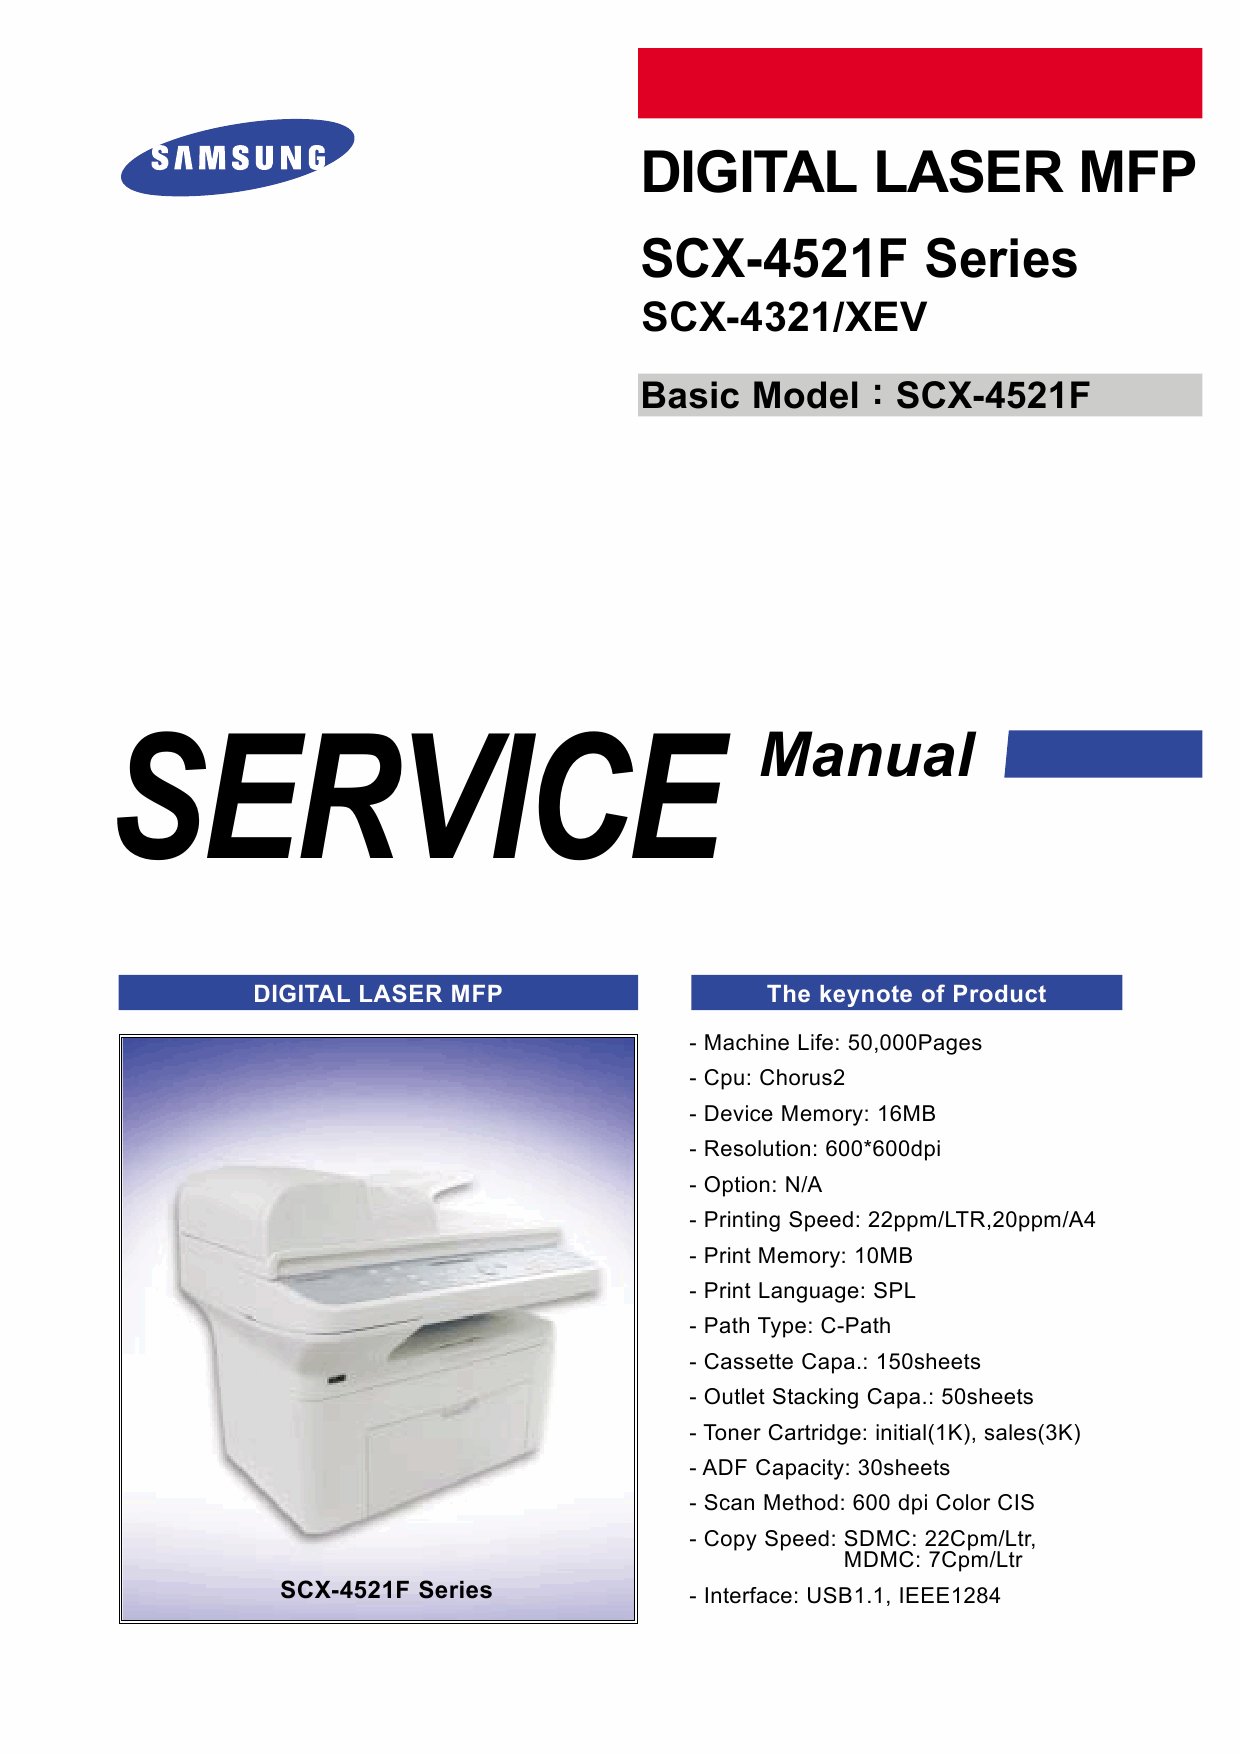 Samsung Digital-Laser-MFP SCX-4521F 4321 Parts and Service Manual-1